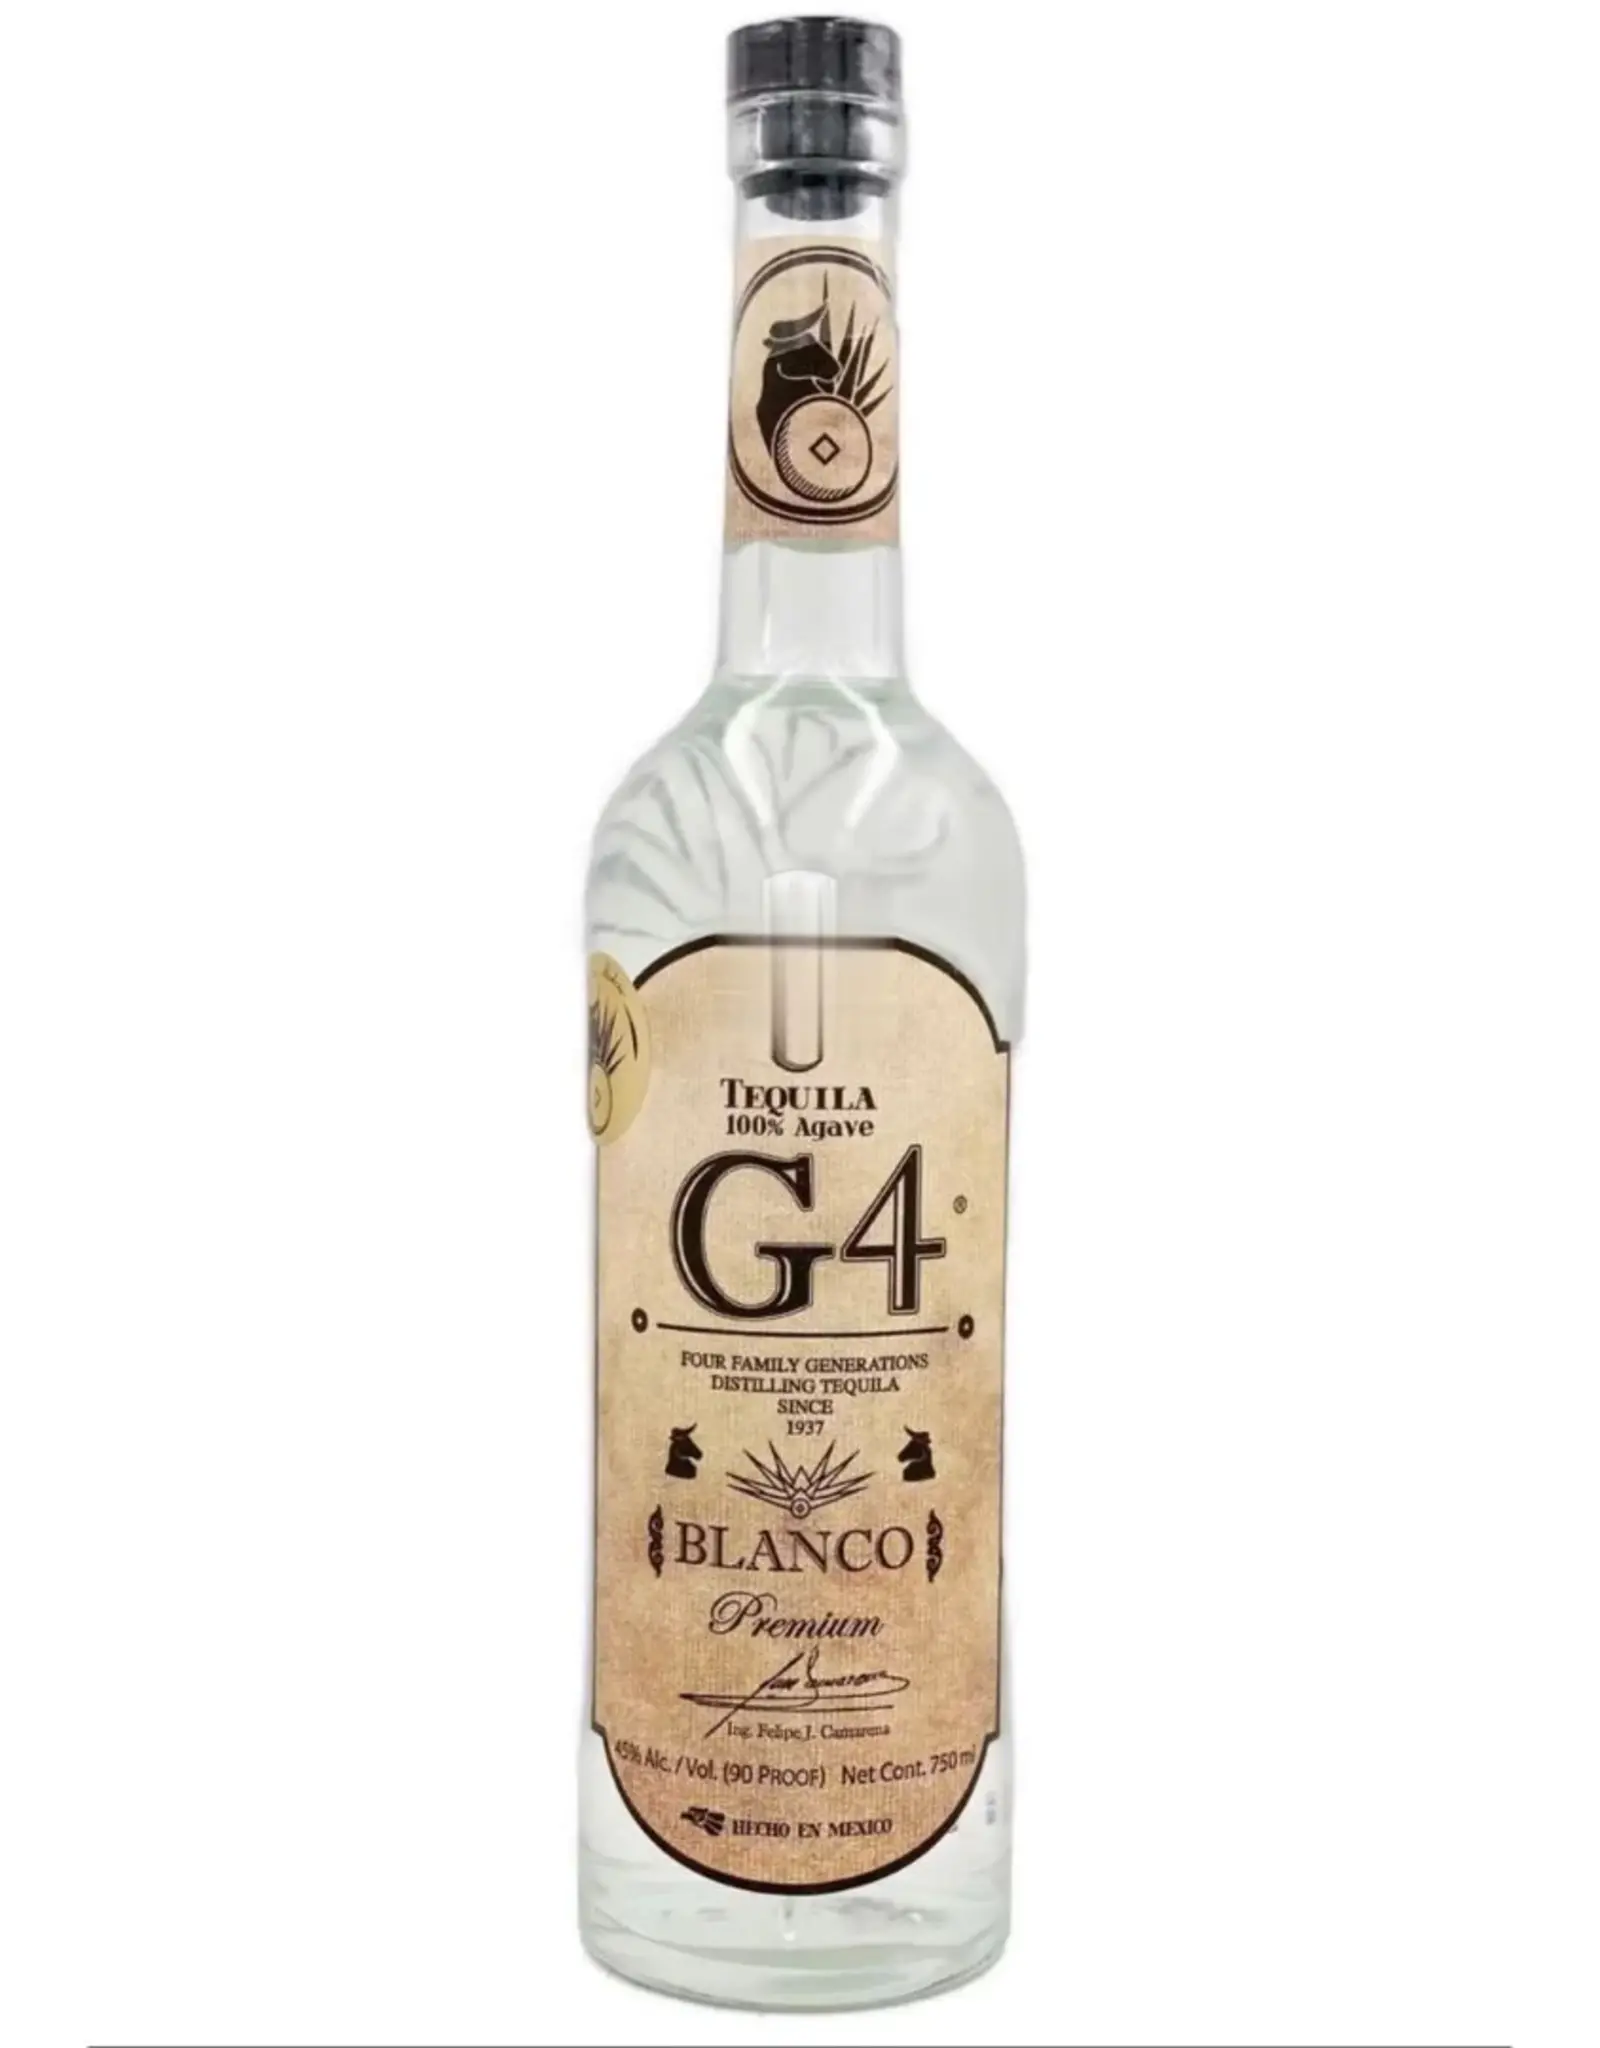 G 4 Tequila Blanco Madera - 45 %